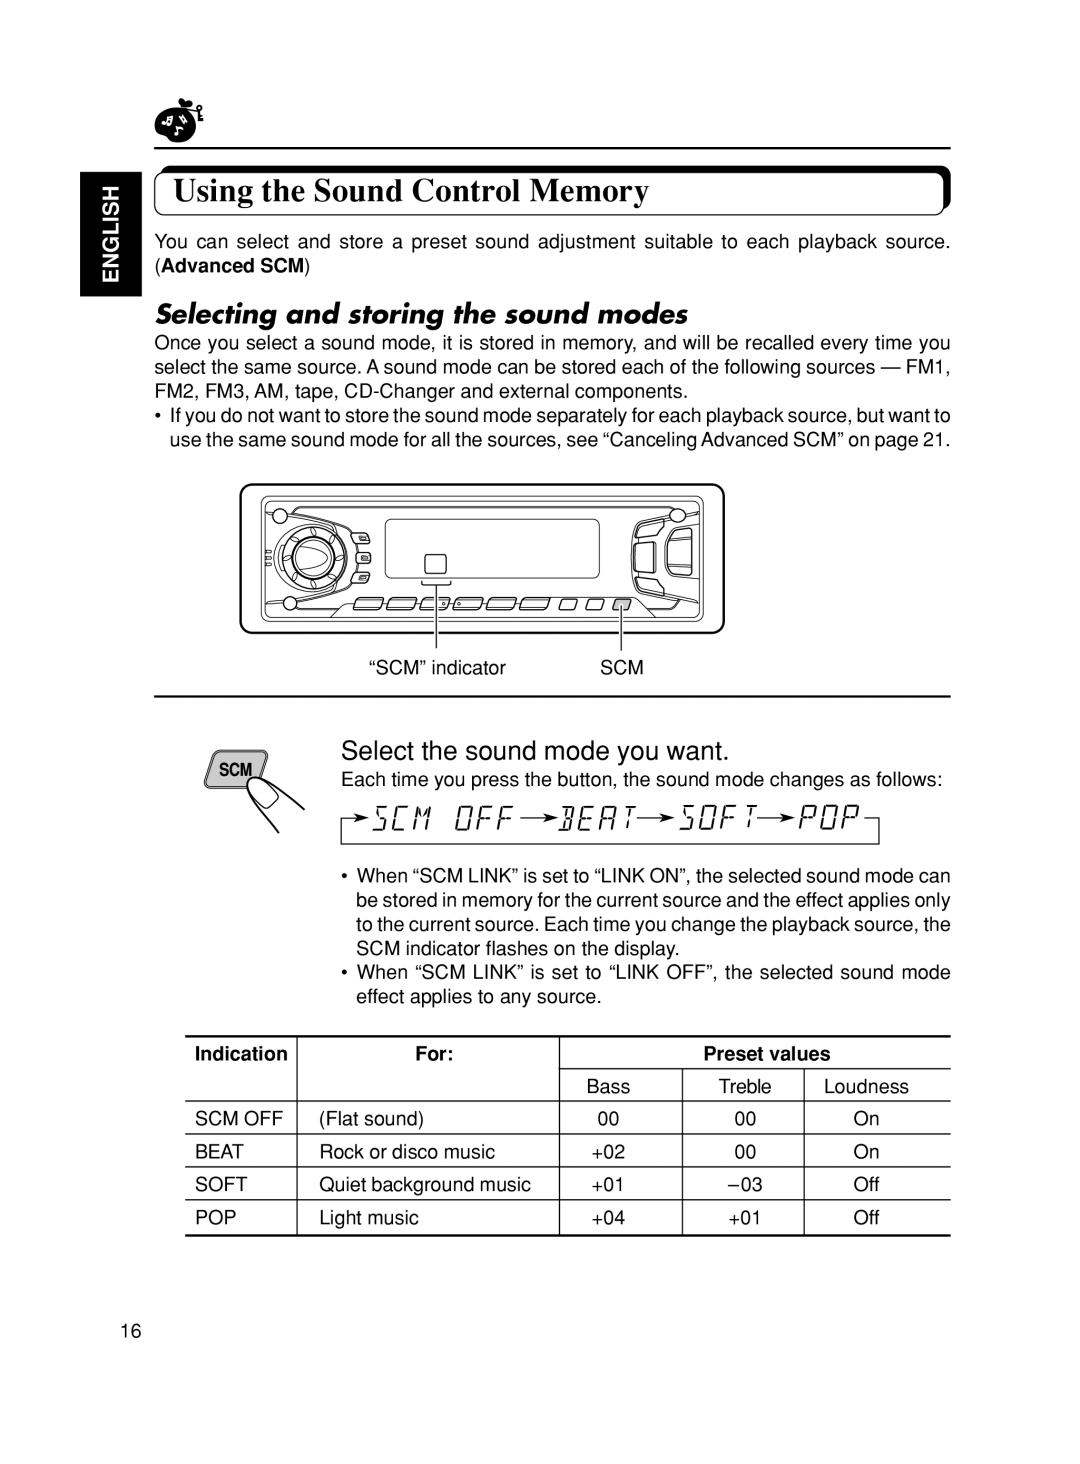 JVC KS-FX90 Using the Sound Control Memory, Selecting and storing the sound modes, Select the sound mode you want, English 